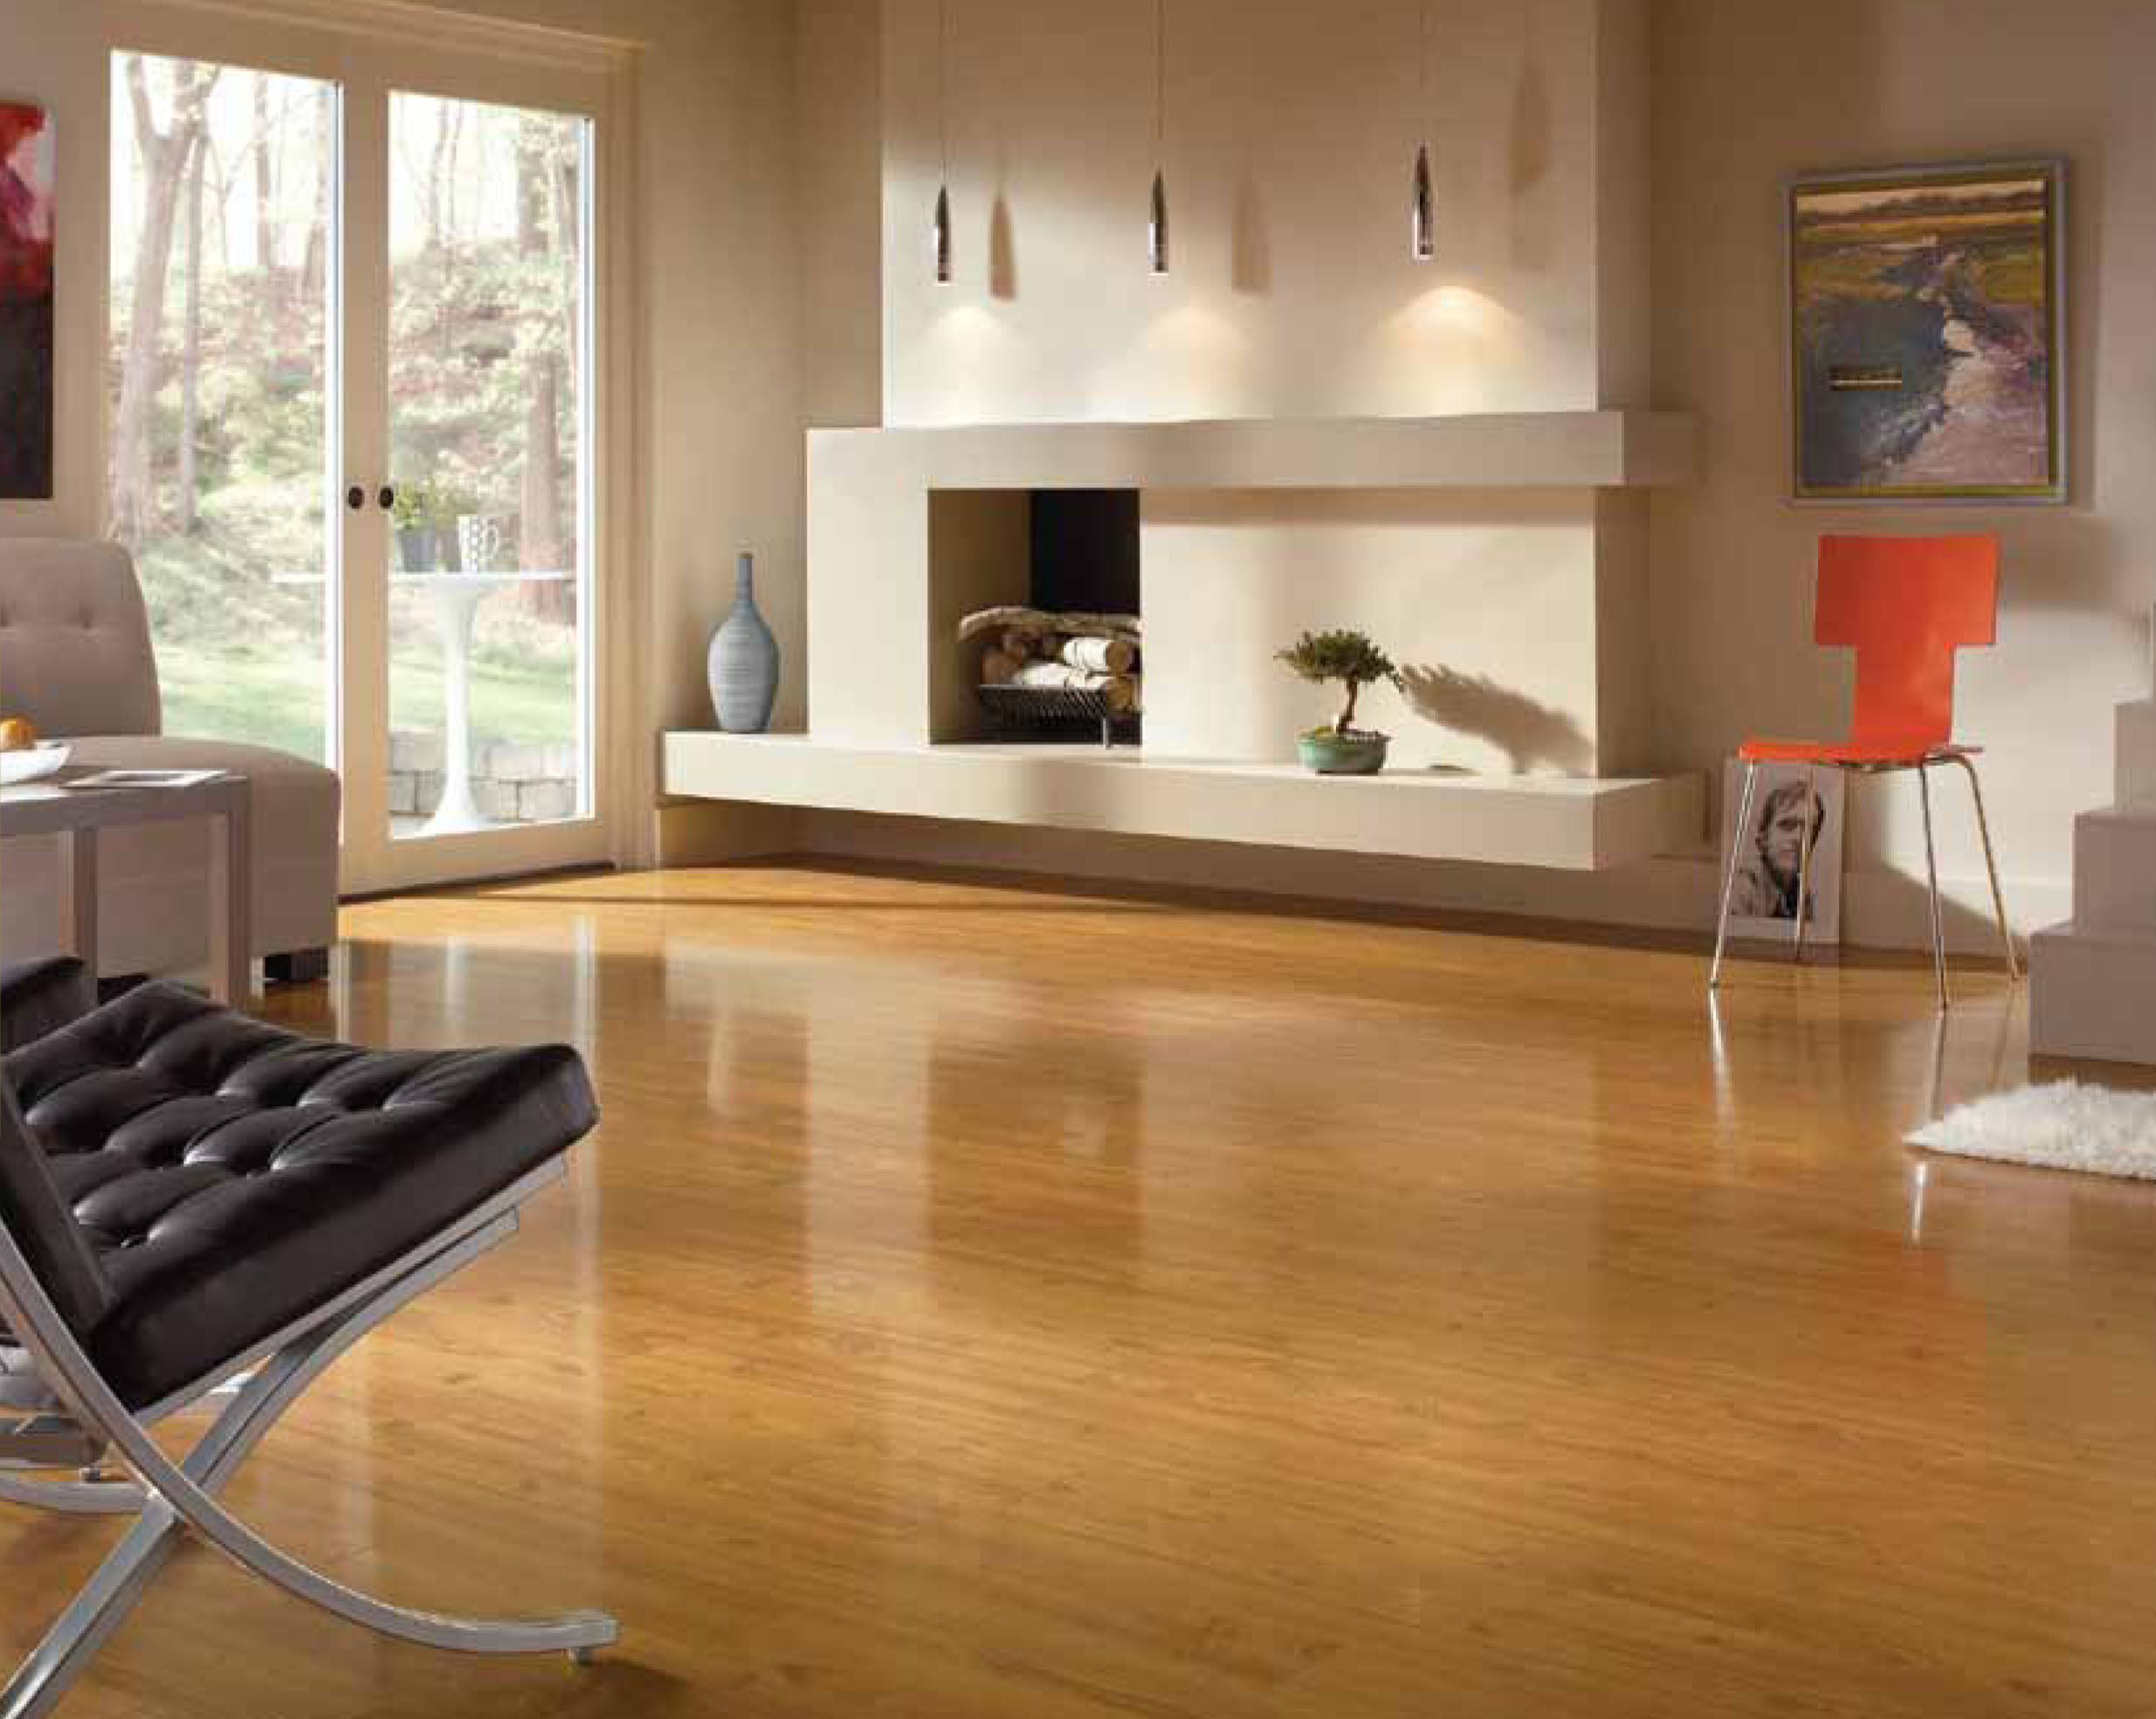 Floors Ideas For Living Room
 10 Laminated Wooden Flooring Ideas The Sense fort